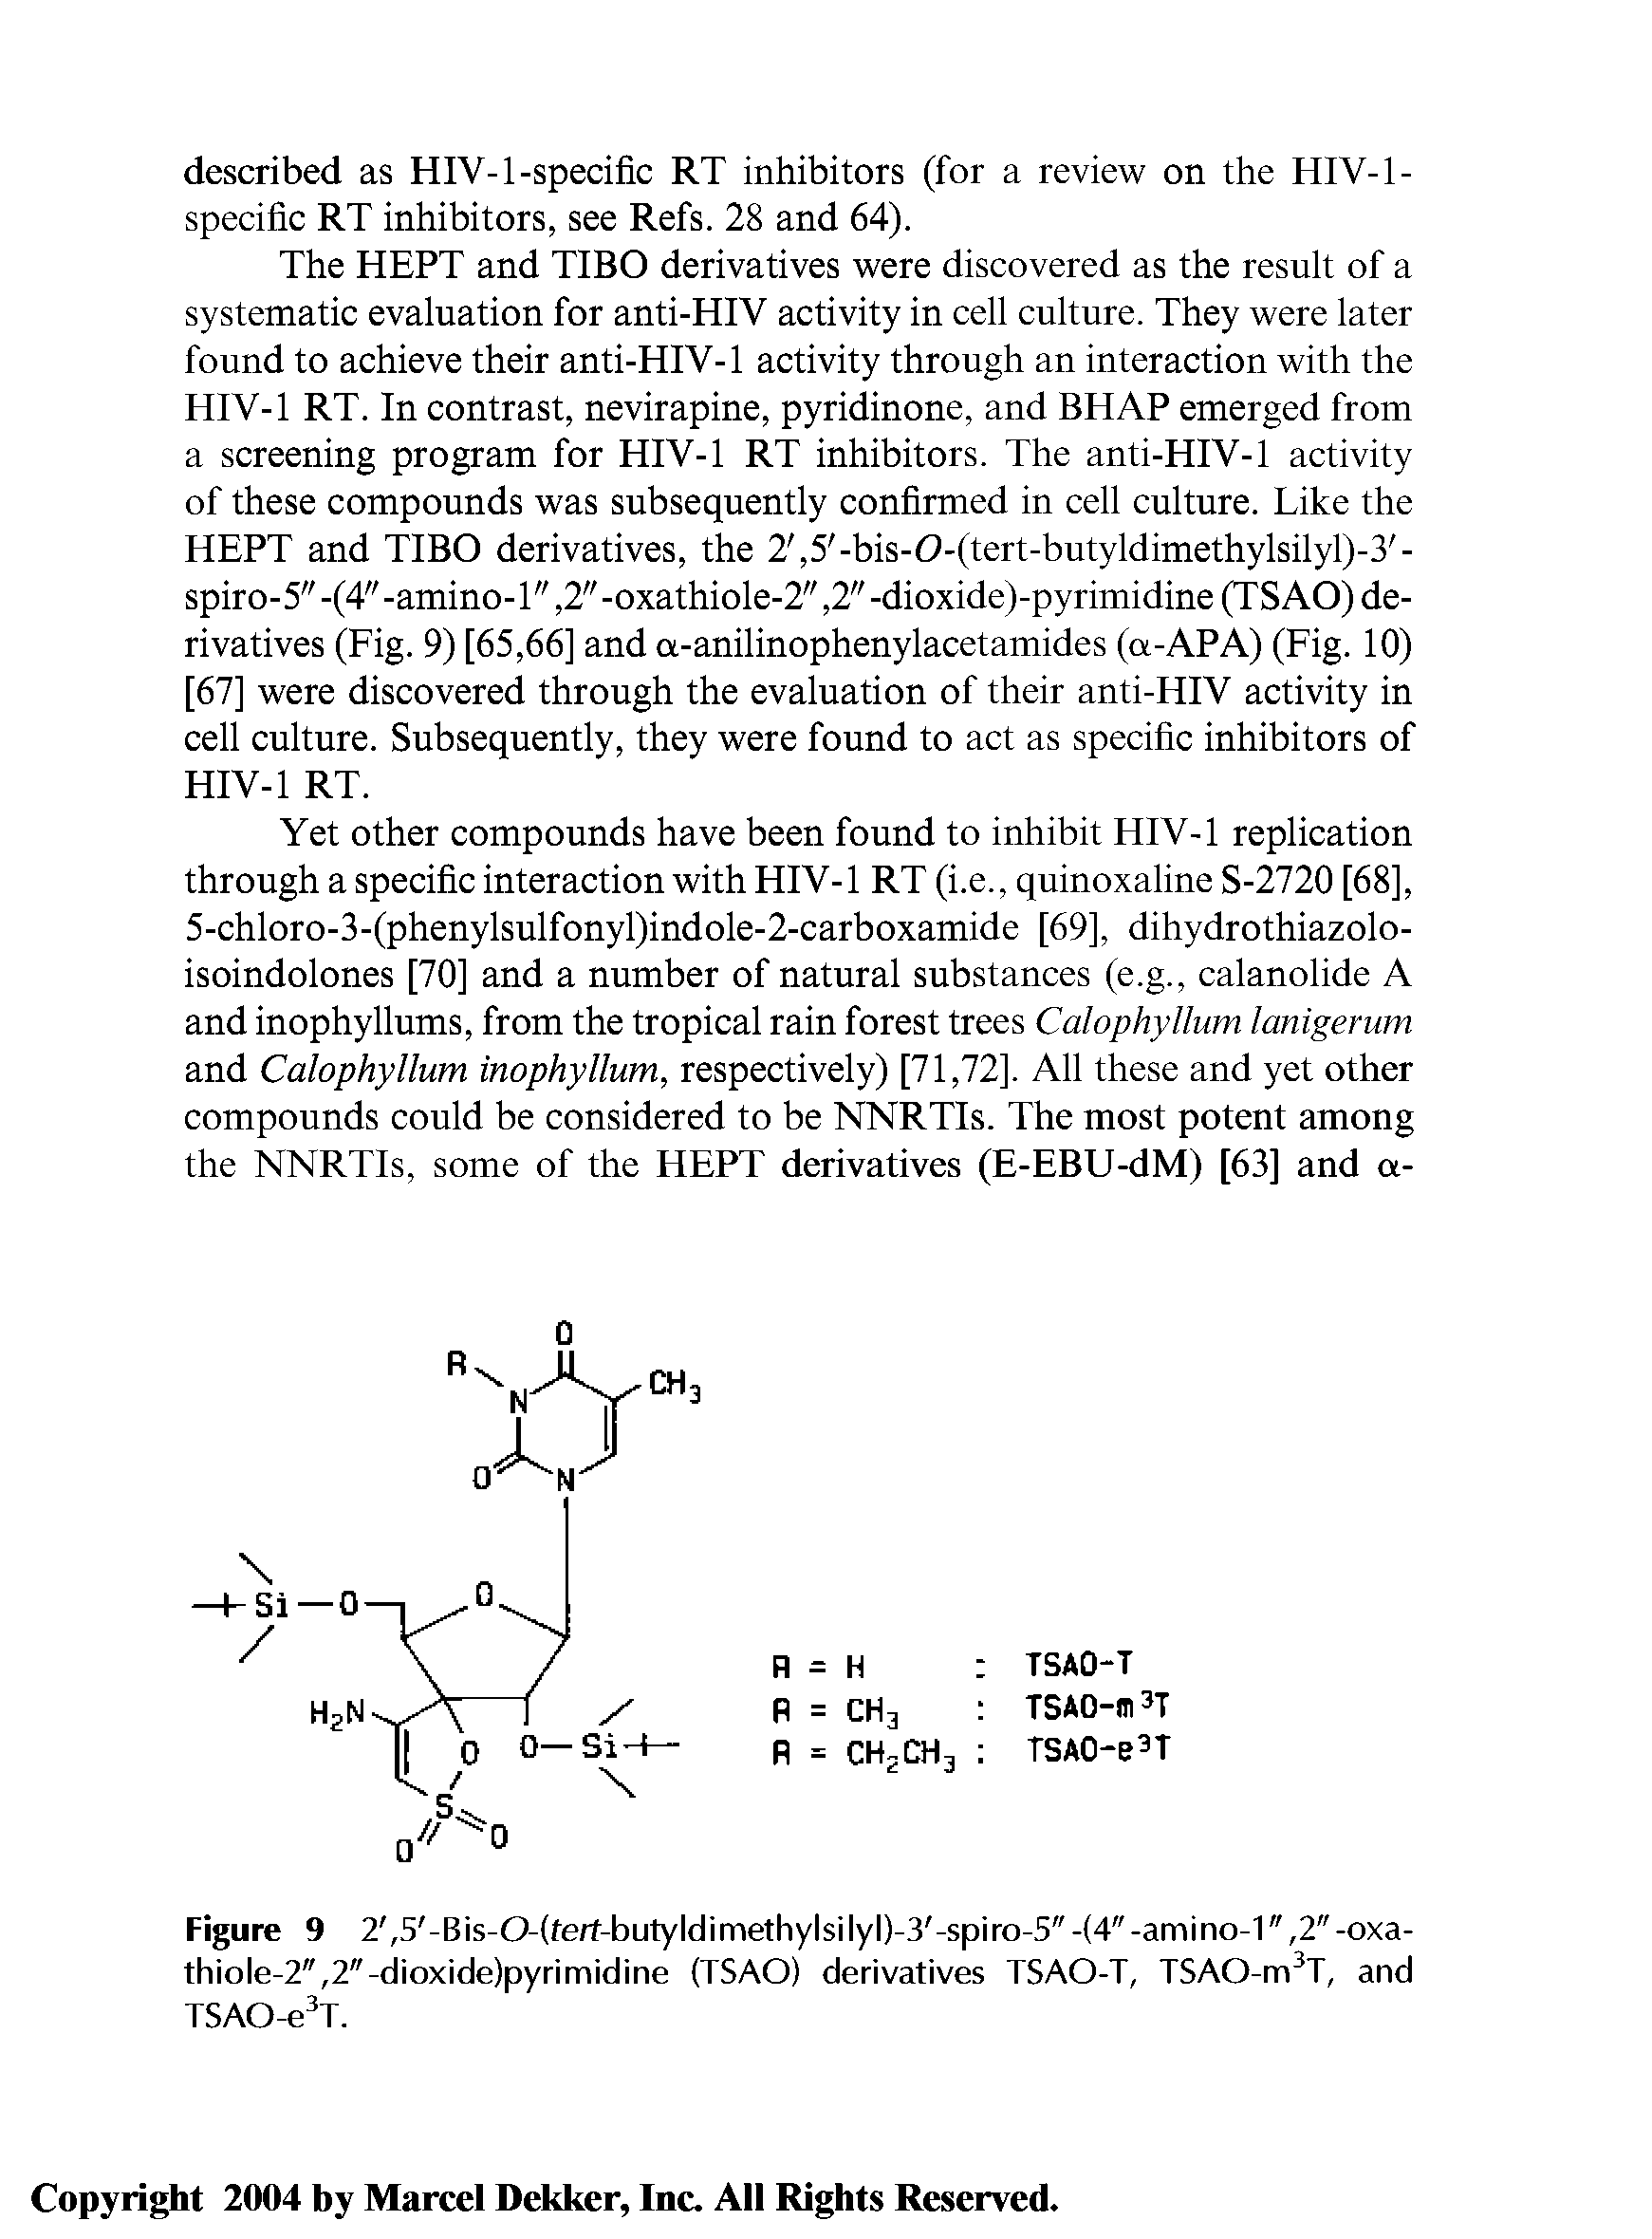 Figure 9 2, 5 -Bis-0-(ferf-butyldimethylsilyl)-3 -spiro-5"-(4"-amino-1",2"-oxa-thiole-2",2"-dioxide)pyrimidine (TSAO) derivatives TSAO-T, TSAO-m3T, and TSAO-e3T.